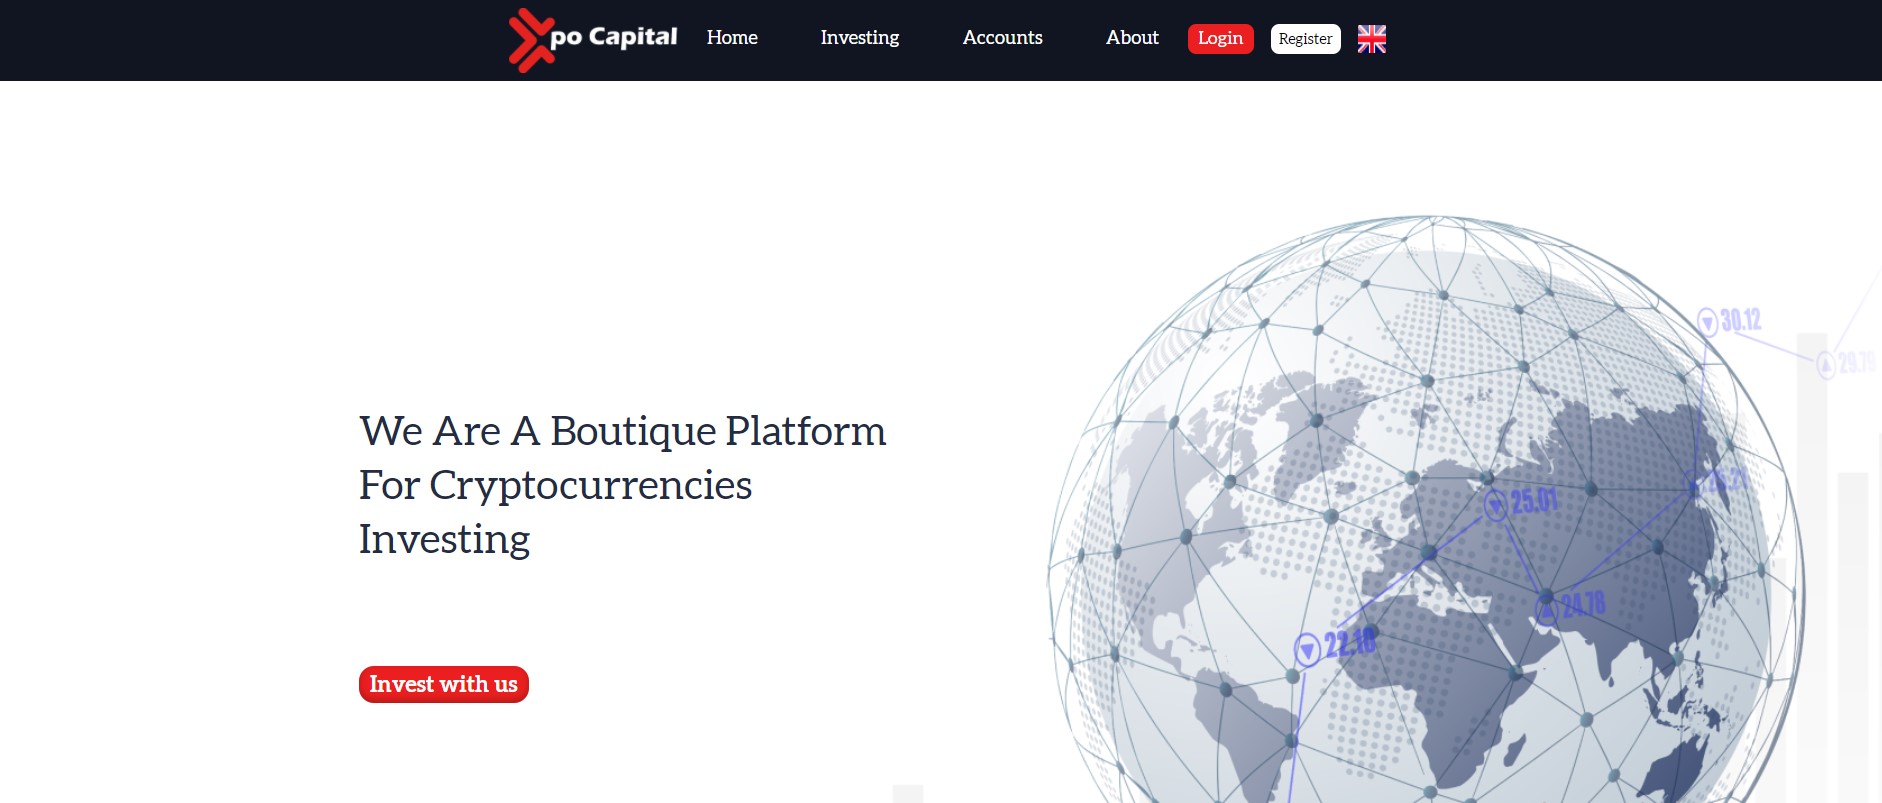 XPO Capital website